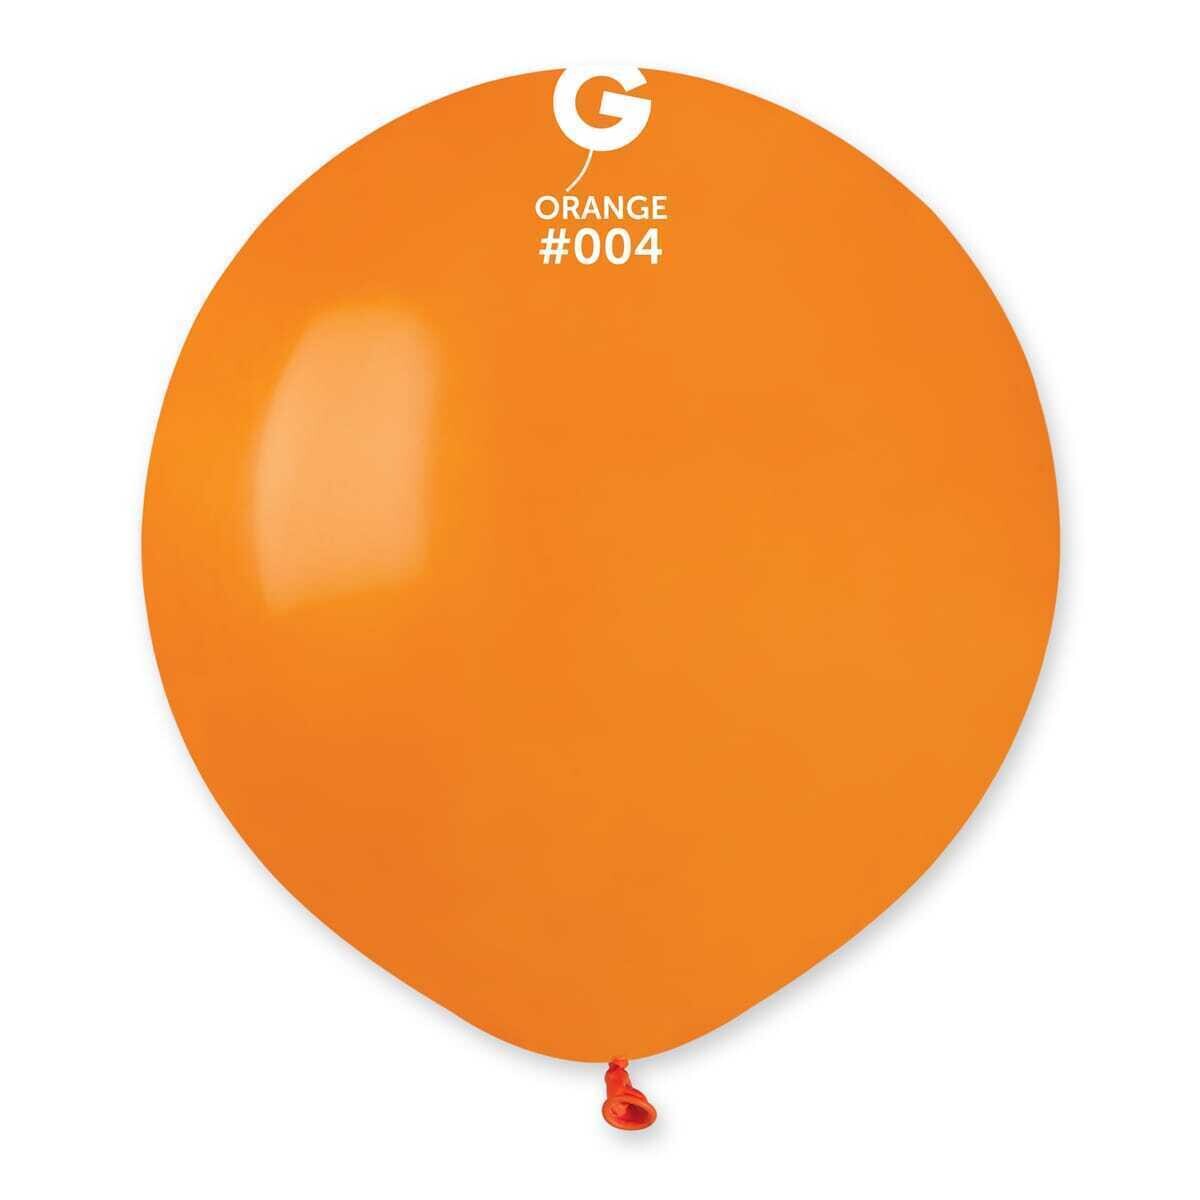 G150: #004 Orange 150452 Standard Color 19 in